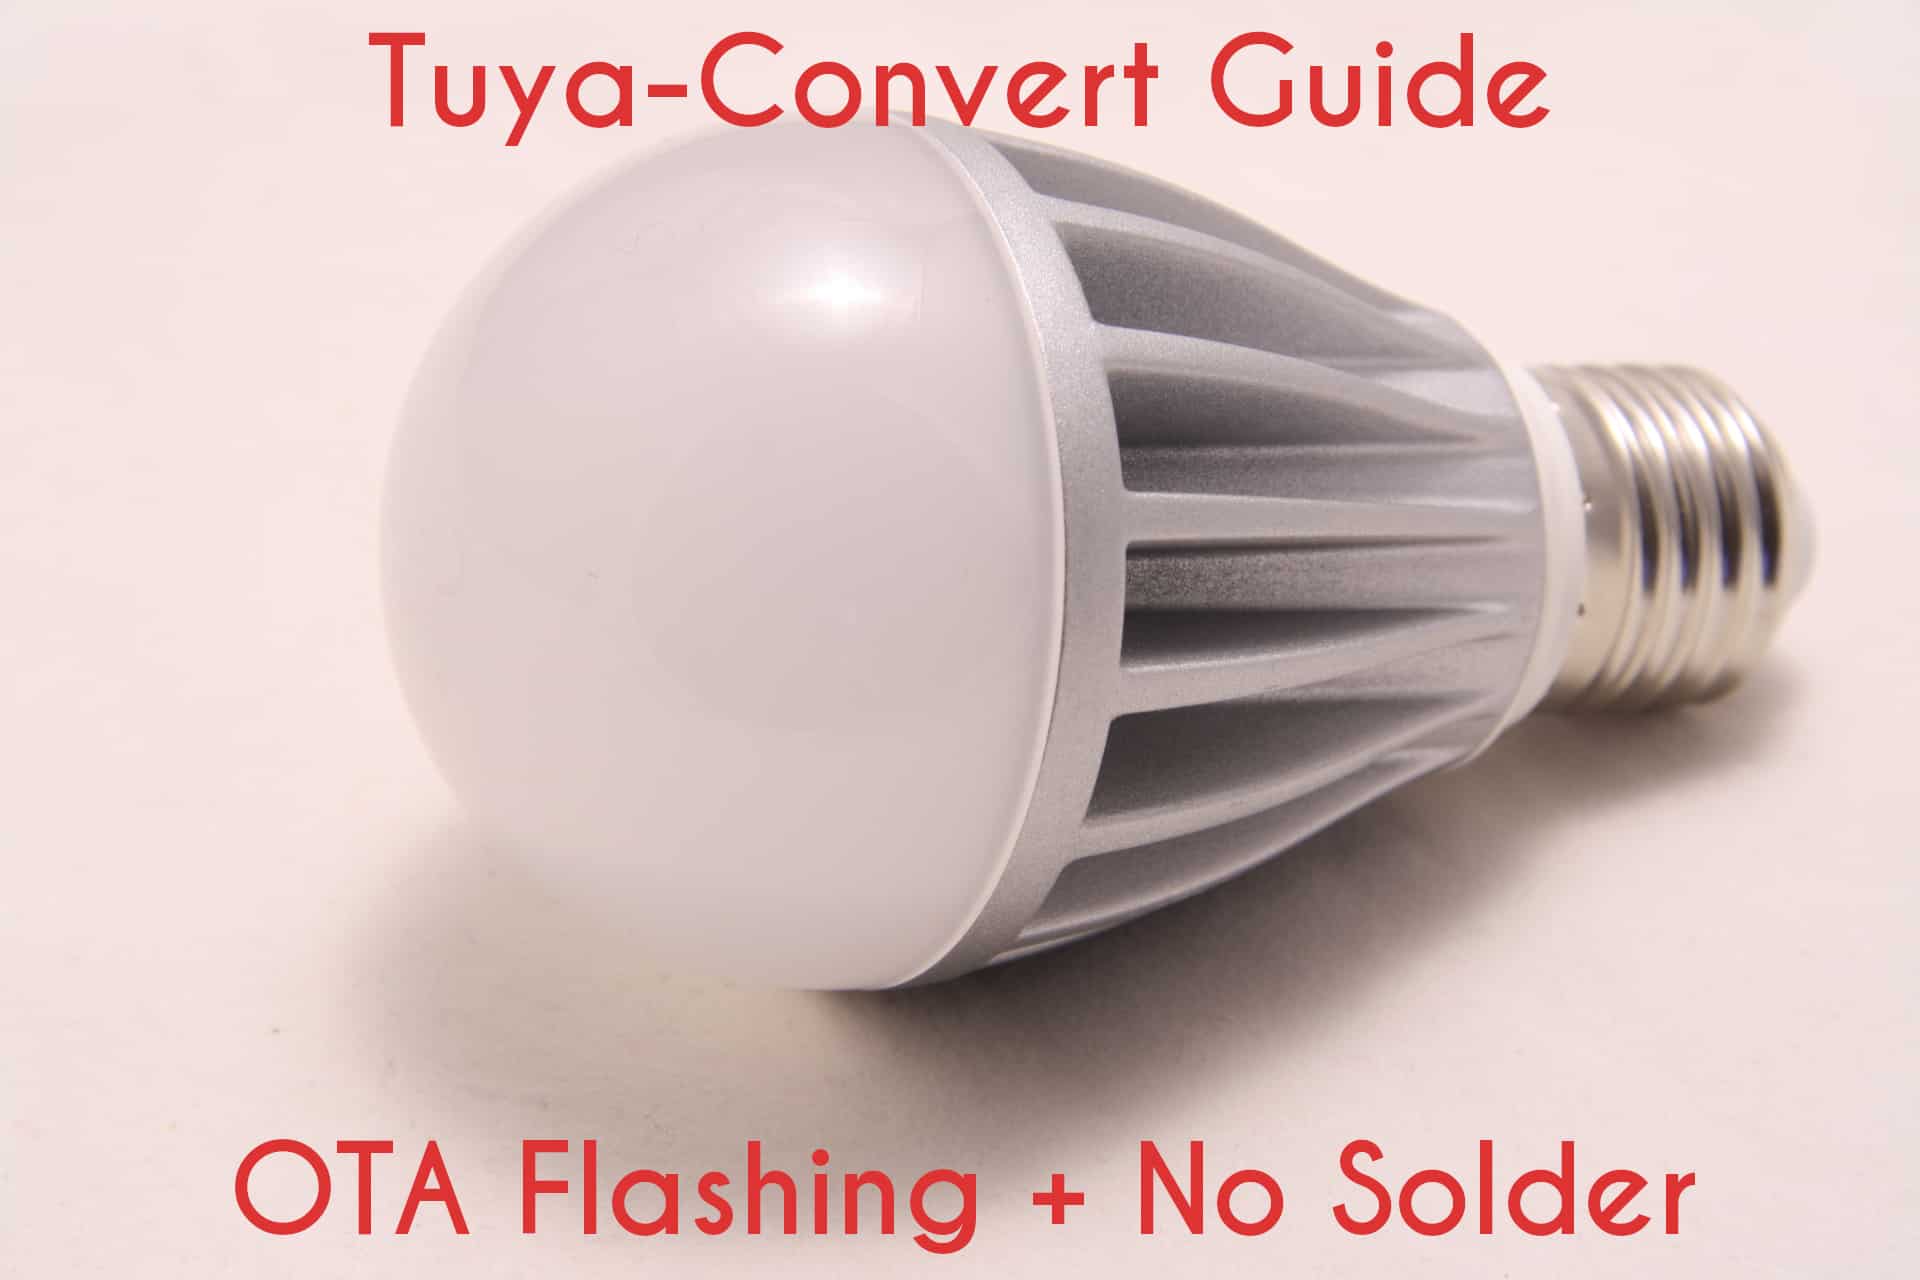 Tuya-Convert guide - OTA flashing of smart bulbs and plugs